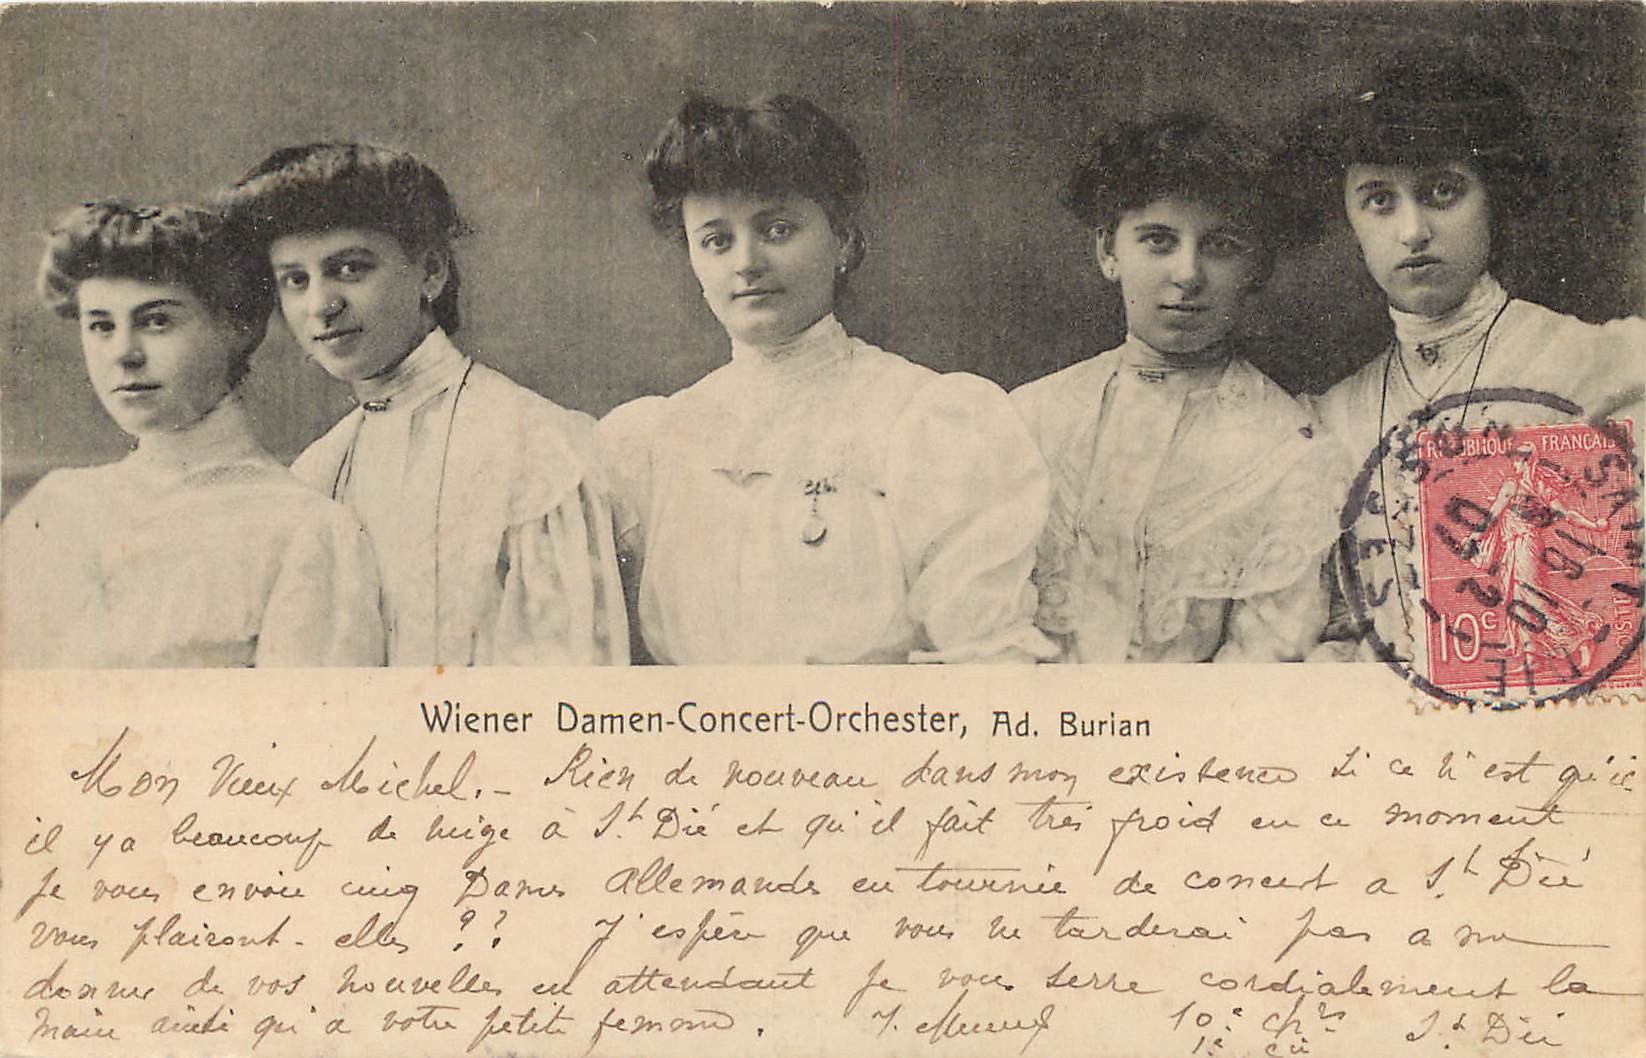 WW AUTRICHE. Wiener Damen-Concert-Orchester 1907